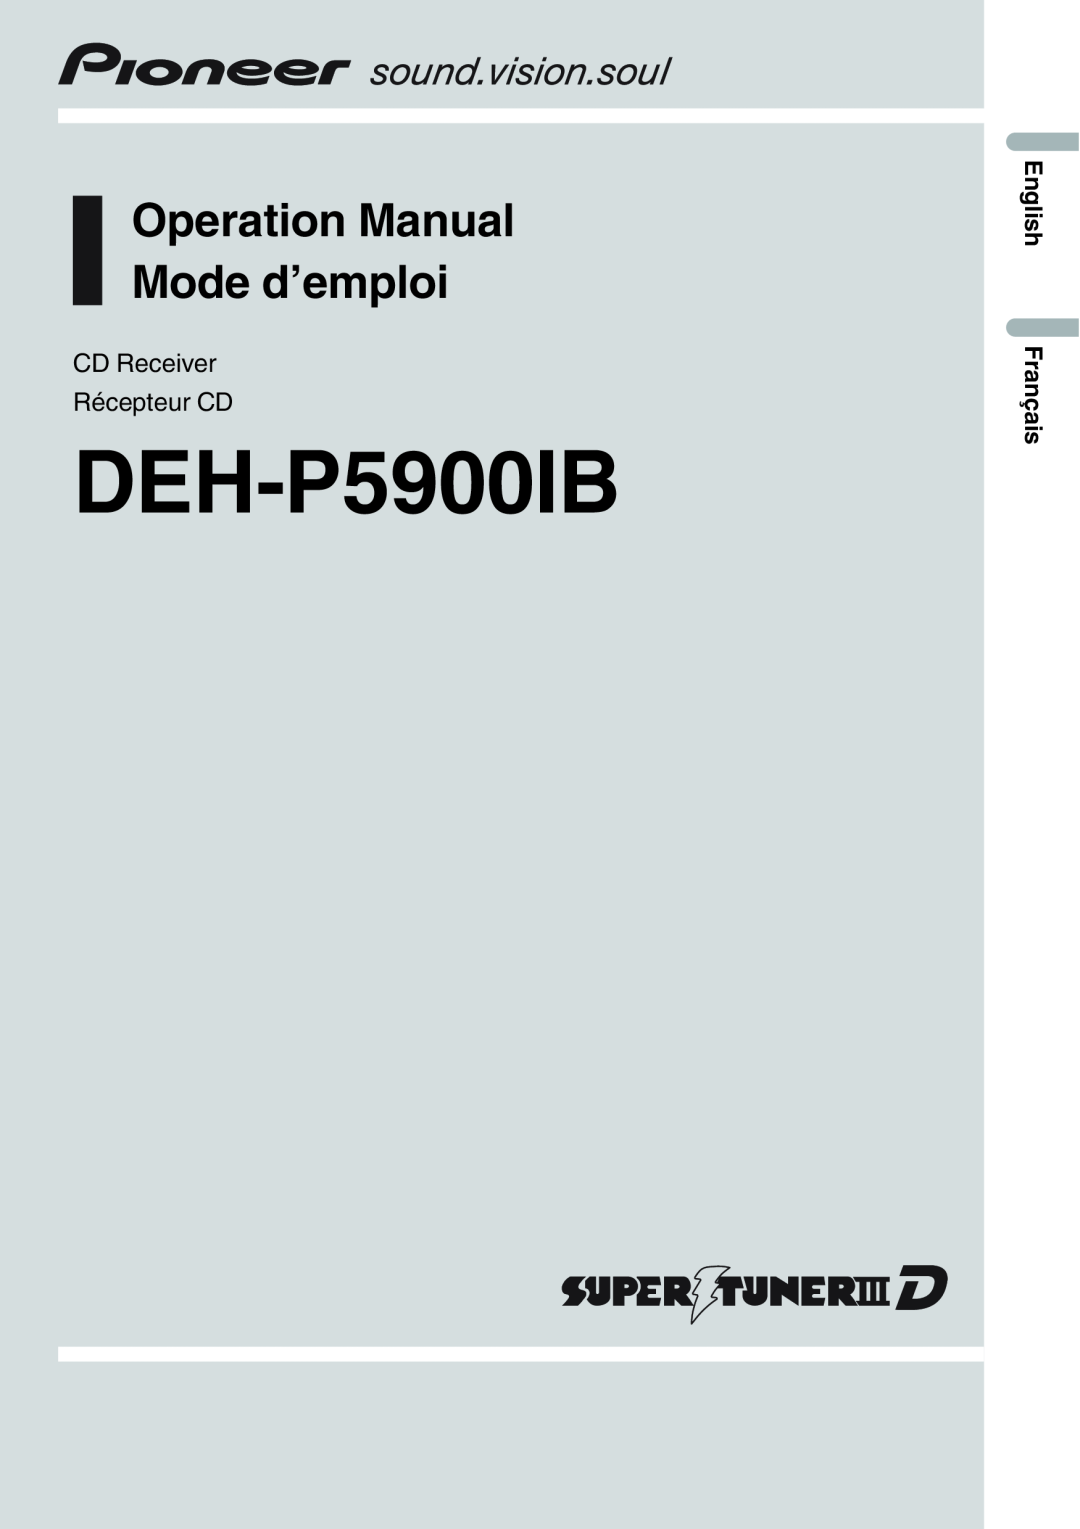 Pioneer DEH-P5900IB operation manual CD Receiver Récepteur CD, English Français, Operation Manual Mode d’emploi 